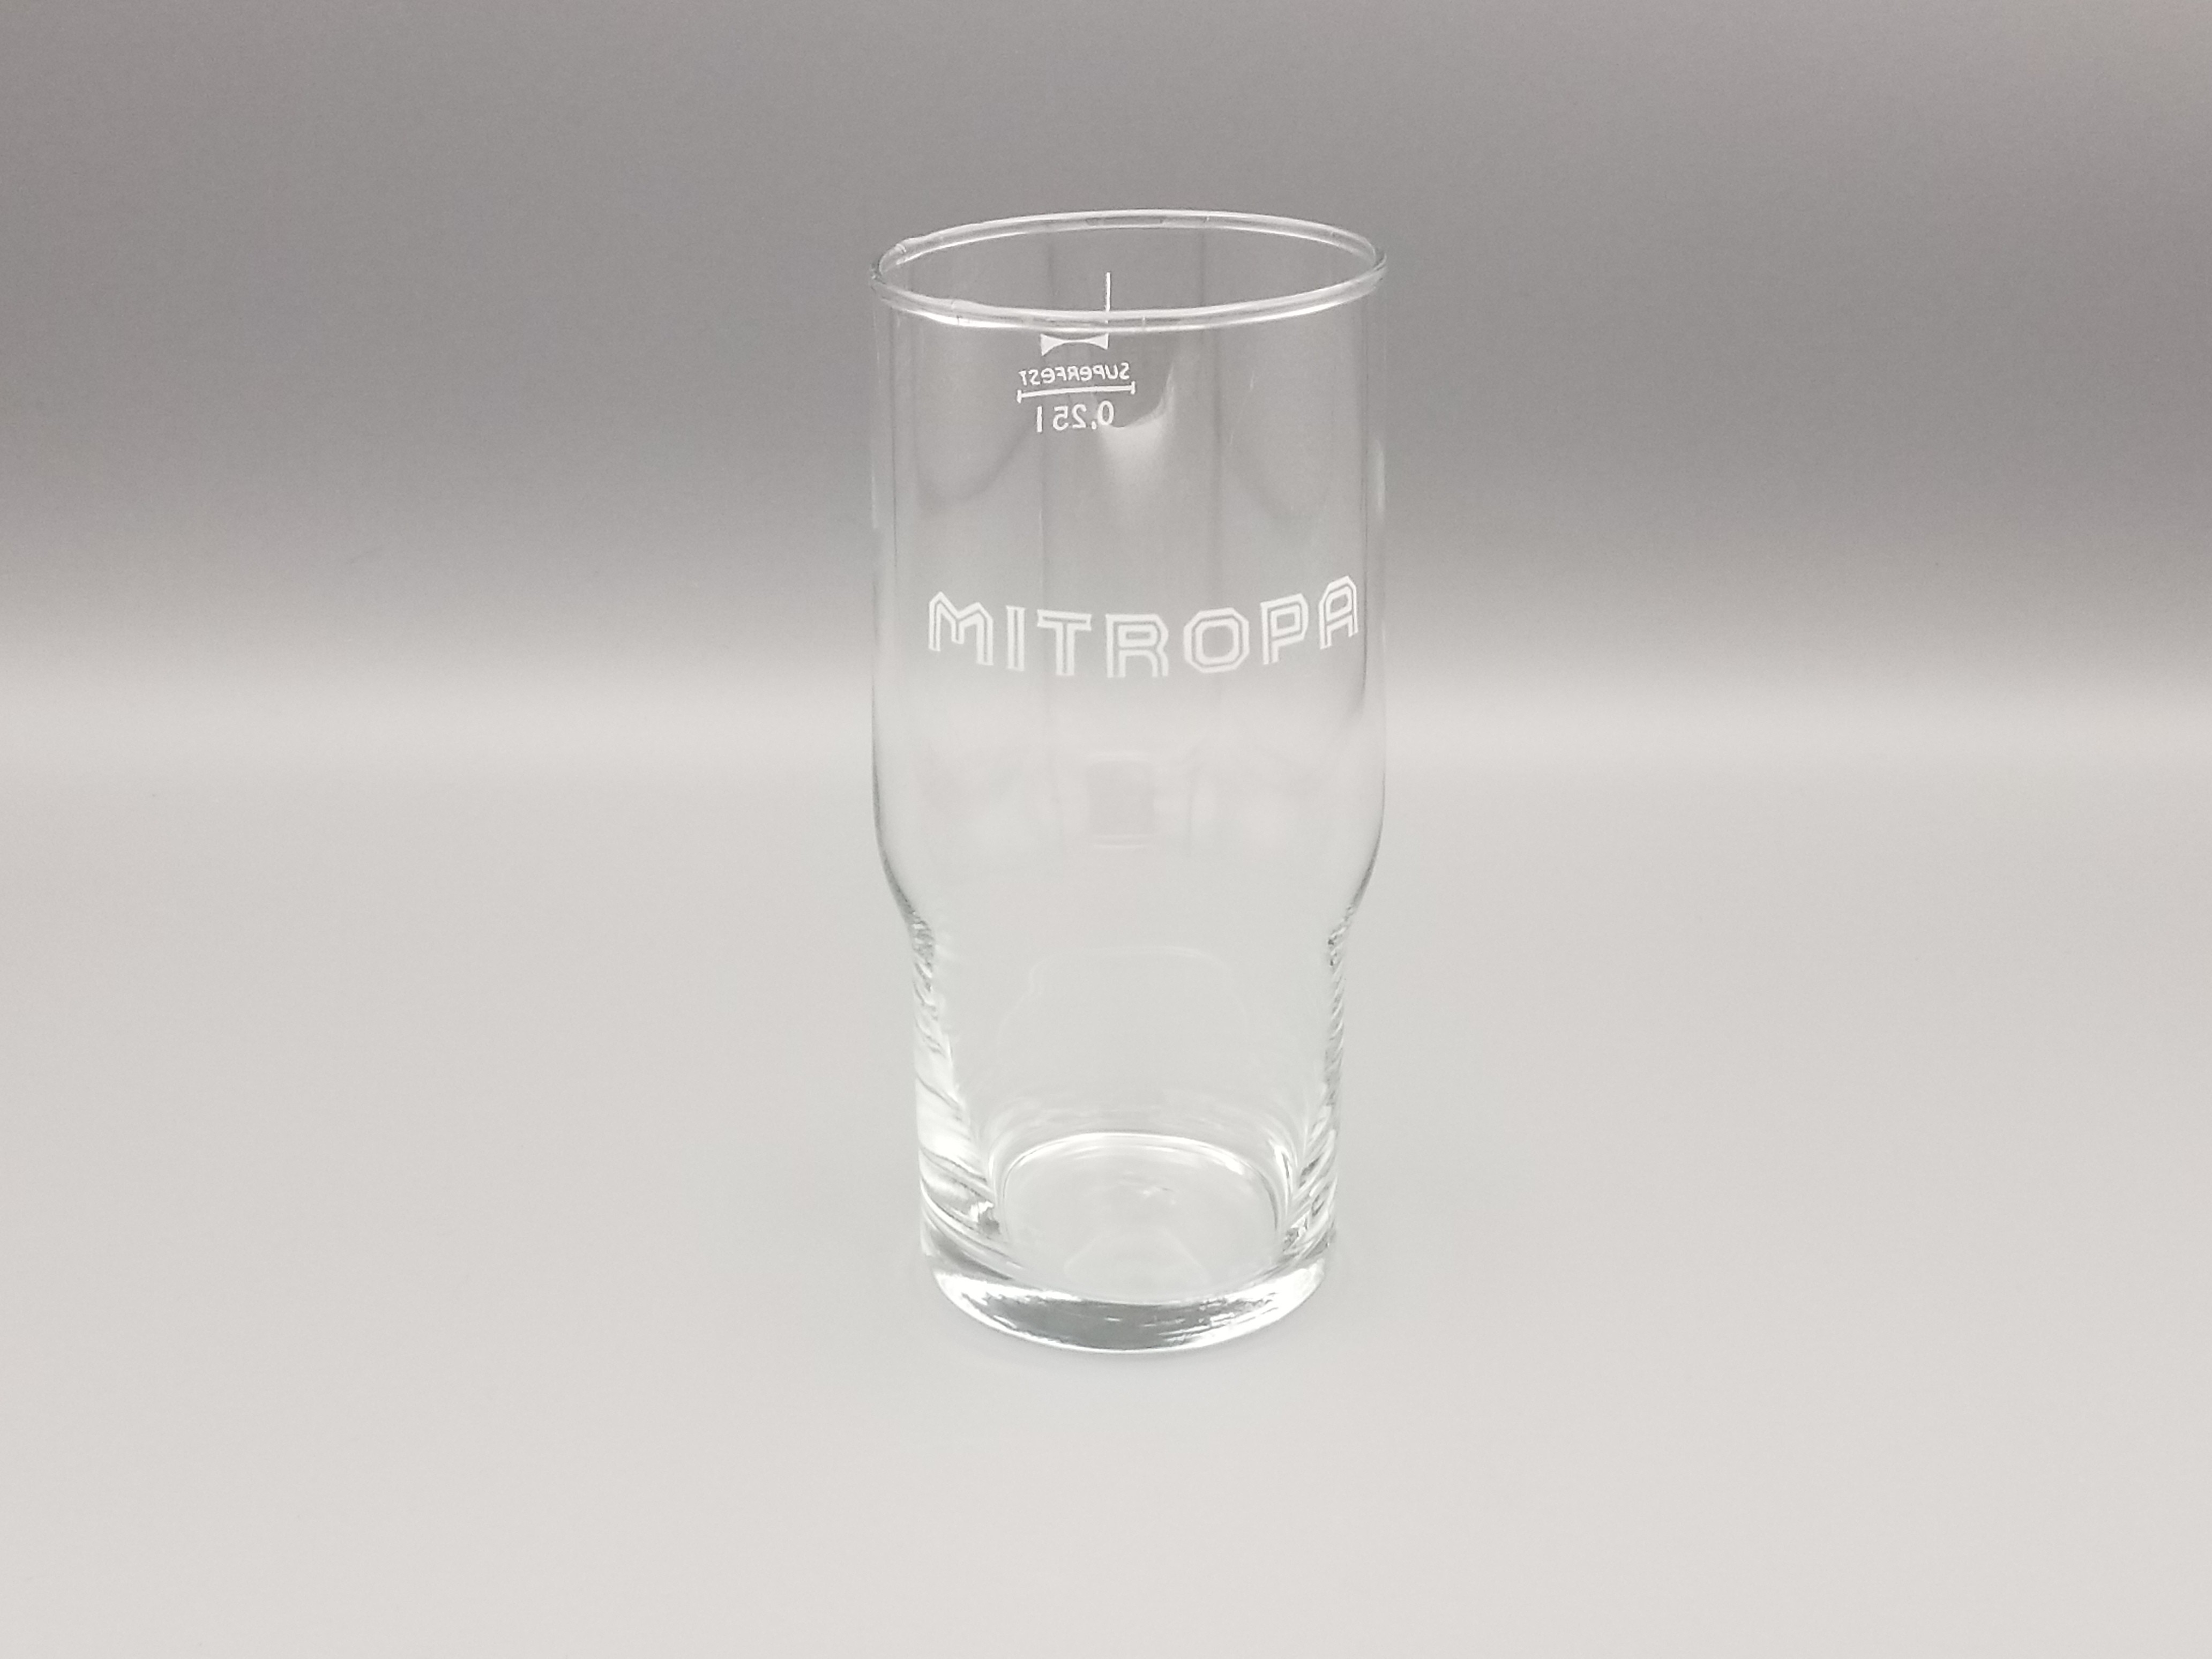 MITROPA Trinkglas 0,25 l "Superfest" (Mobile Welten e.V. CC BY-SA)